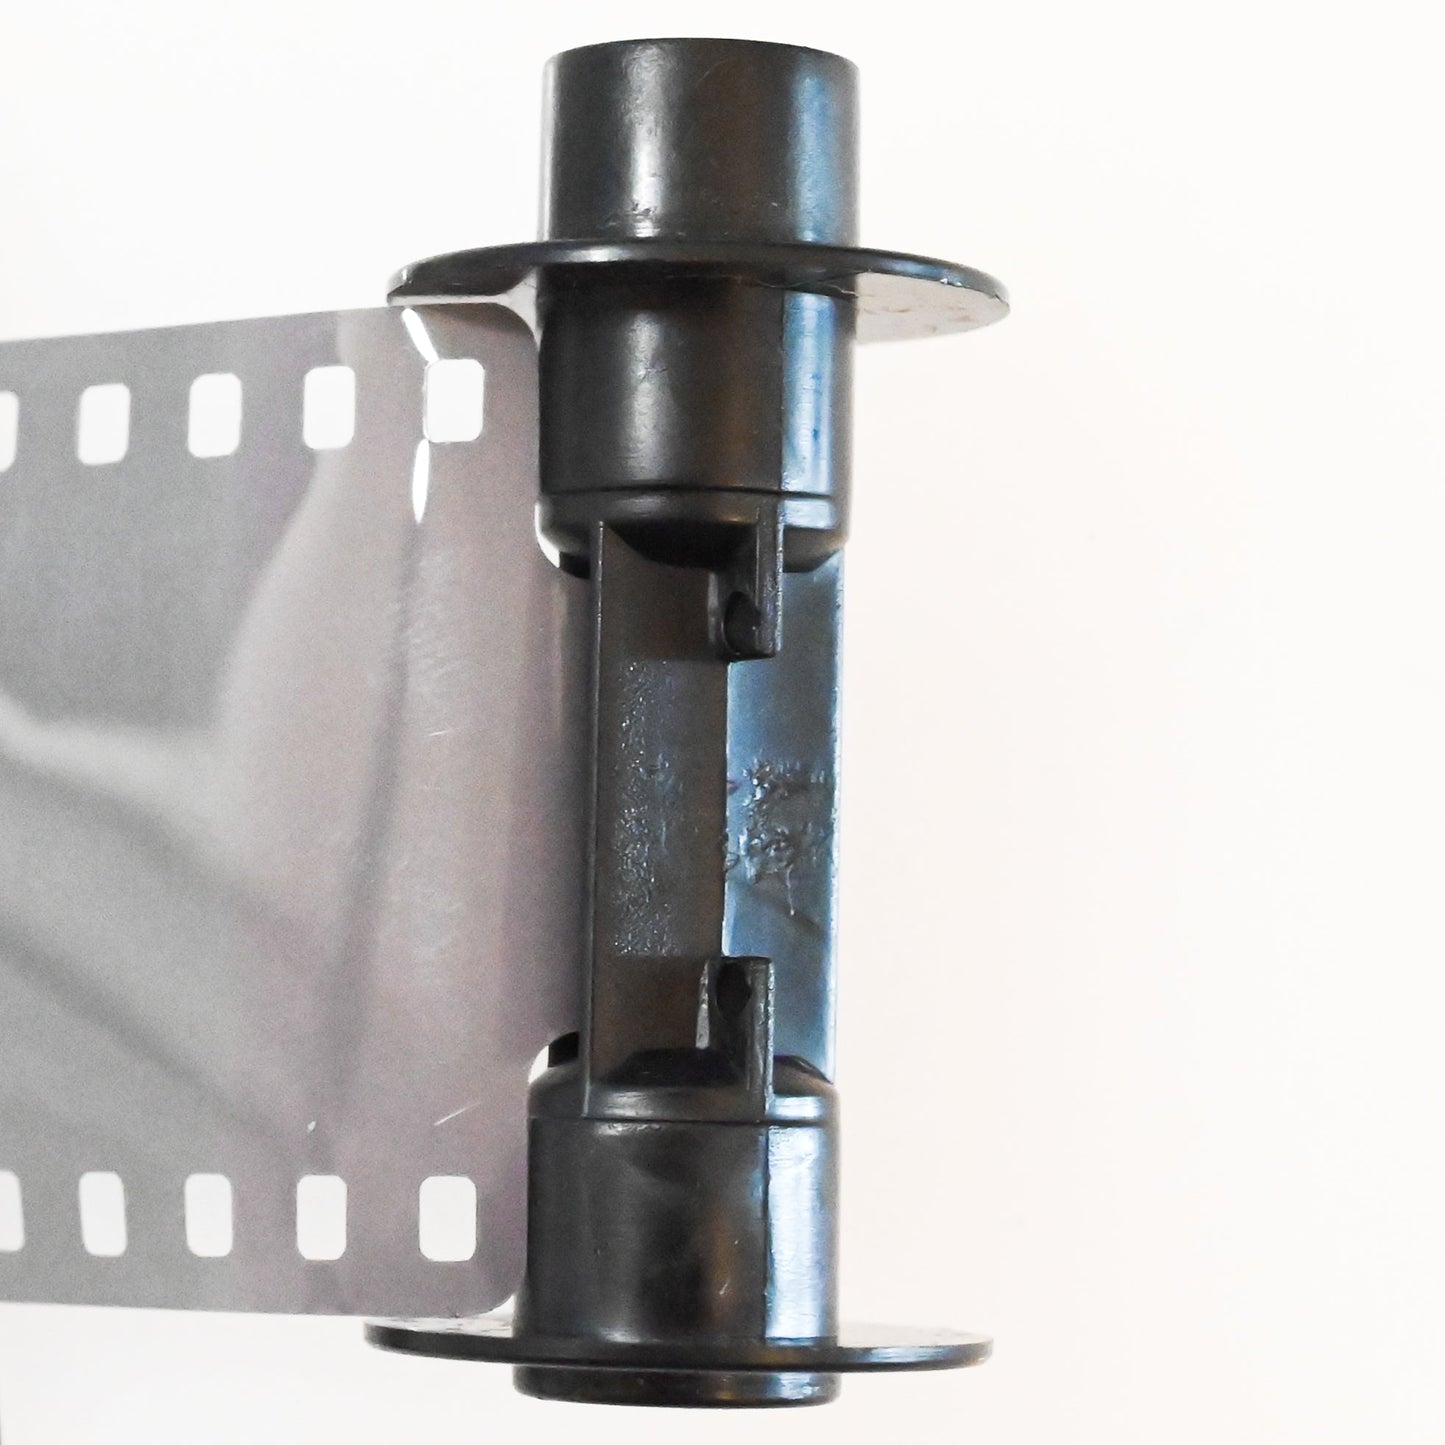 [Free shipping, set of 10] MARIX color negative film 800T 36 sheets MARIX Color movie NegaFilm